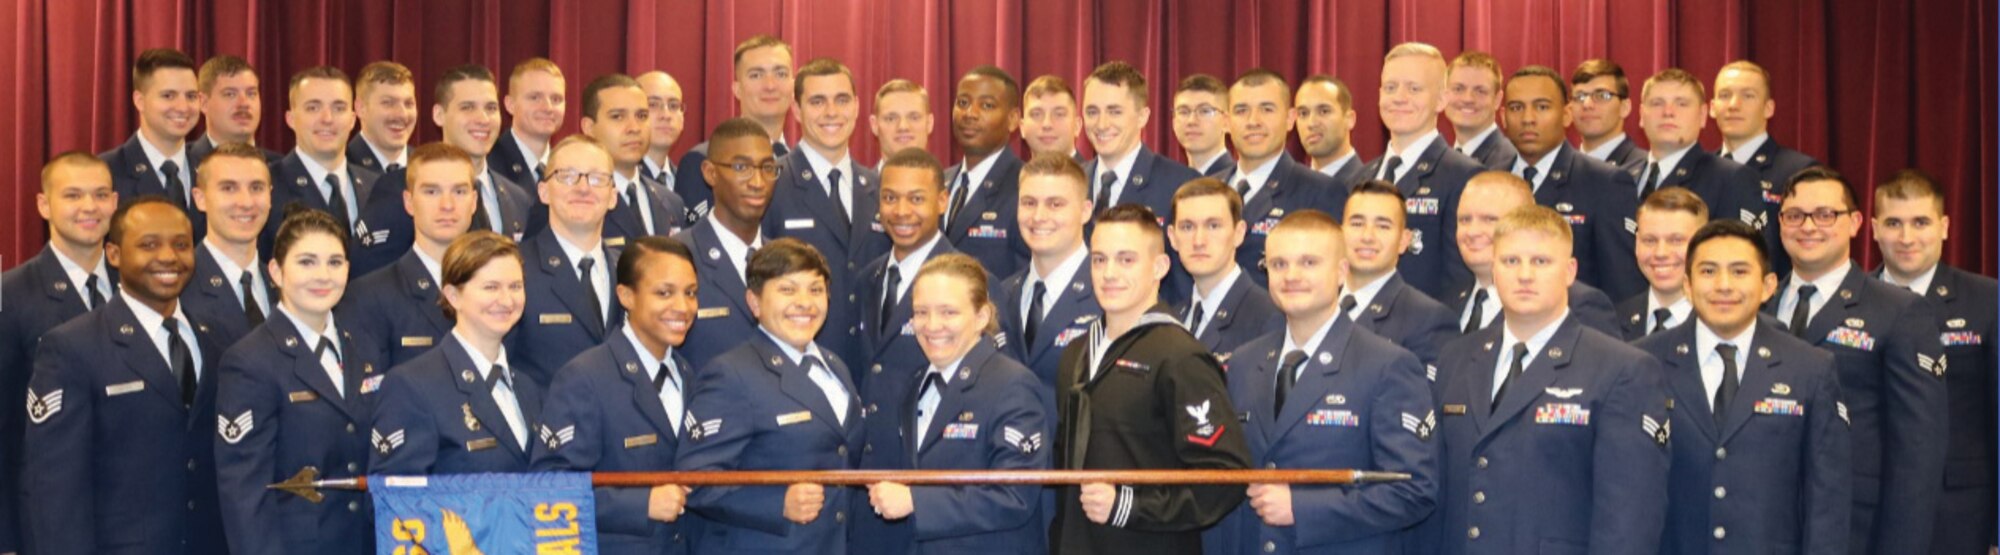 Airman Leadership School Class 18-B graduates. (Courtesy photo)